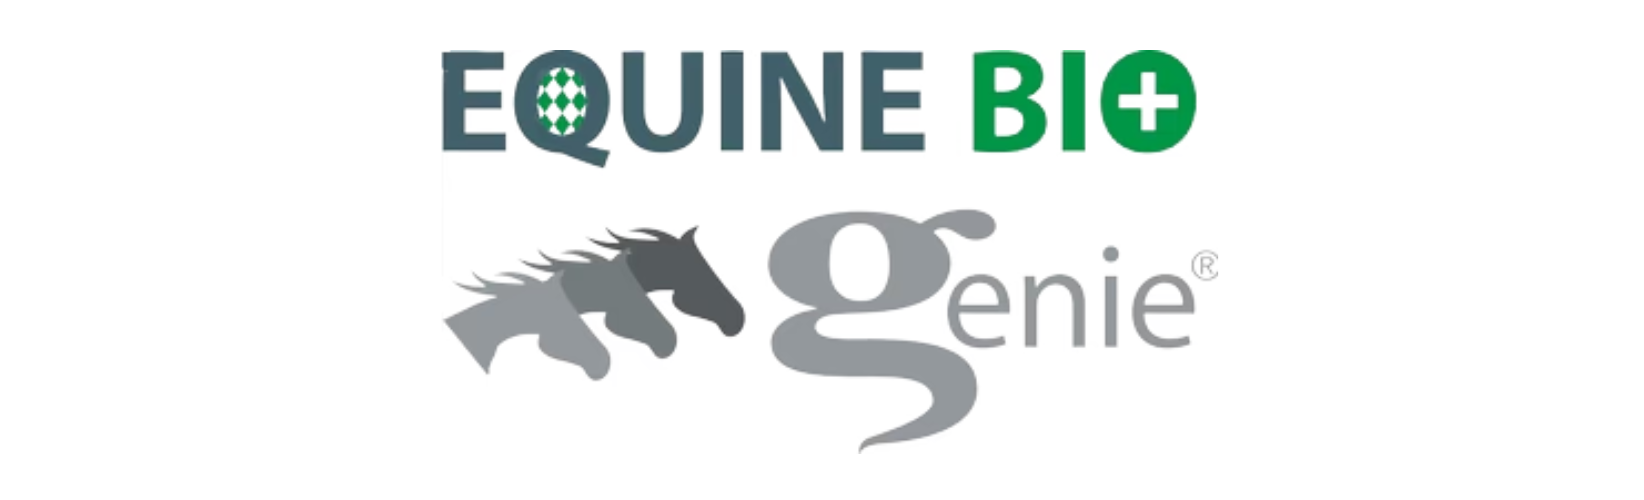 Equine Bio Genie Logo